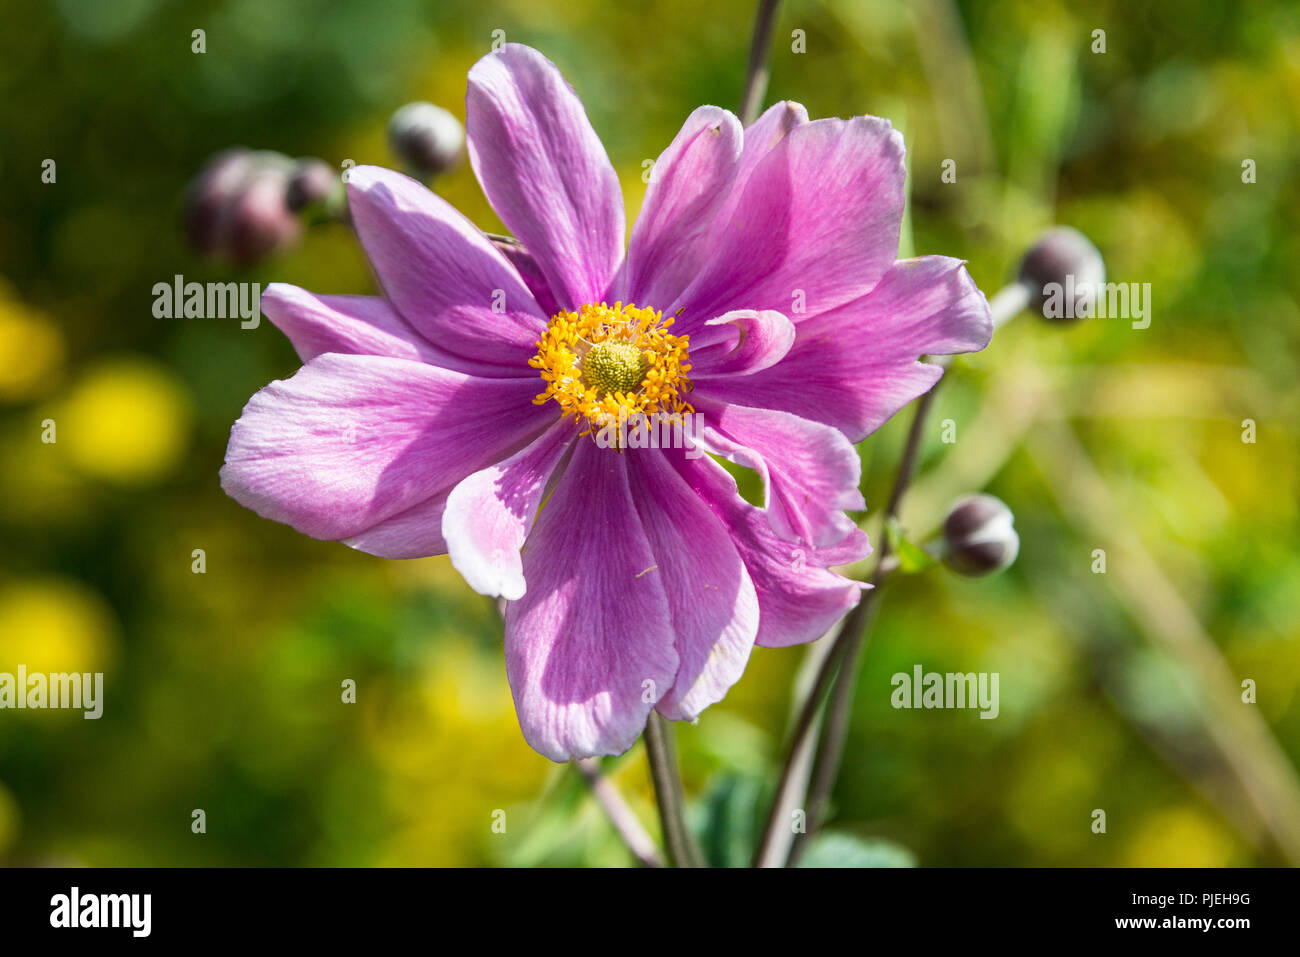 Japanese anemone flower (Anemone × hybrida) Stock Photo